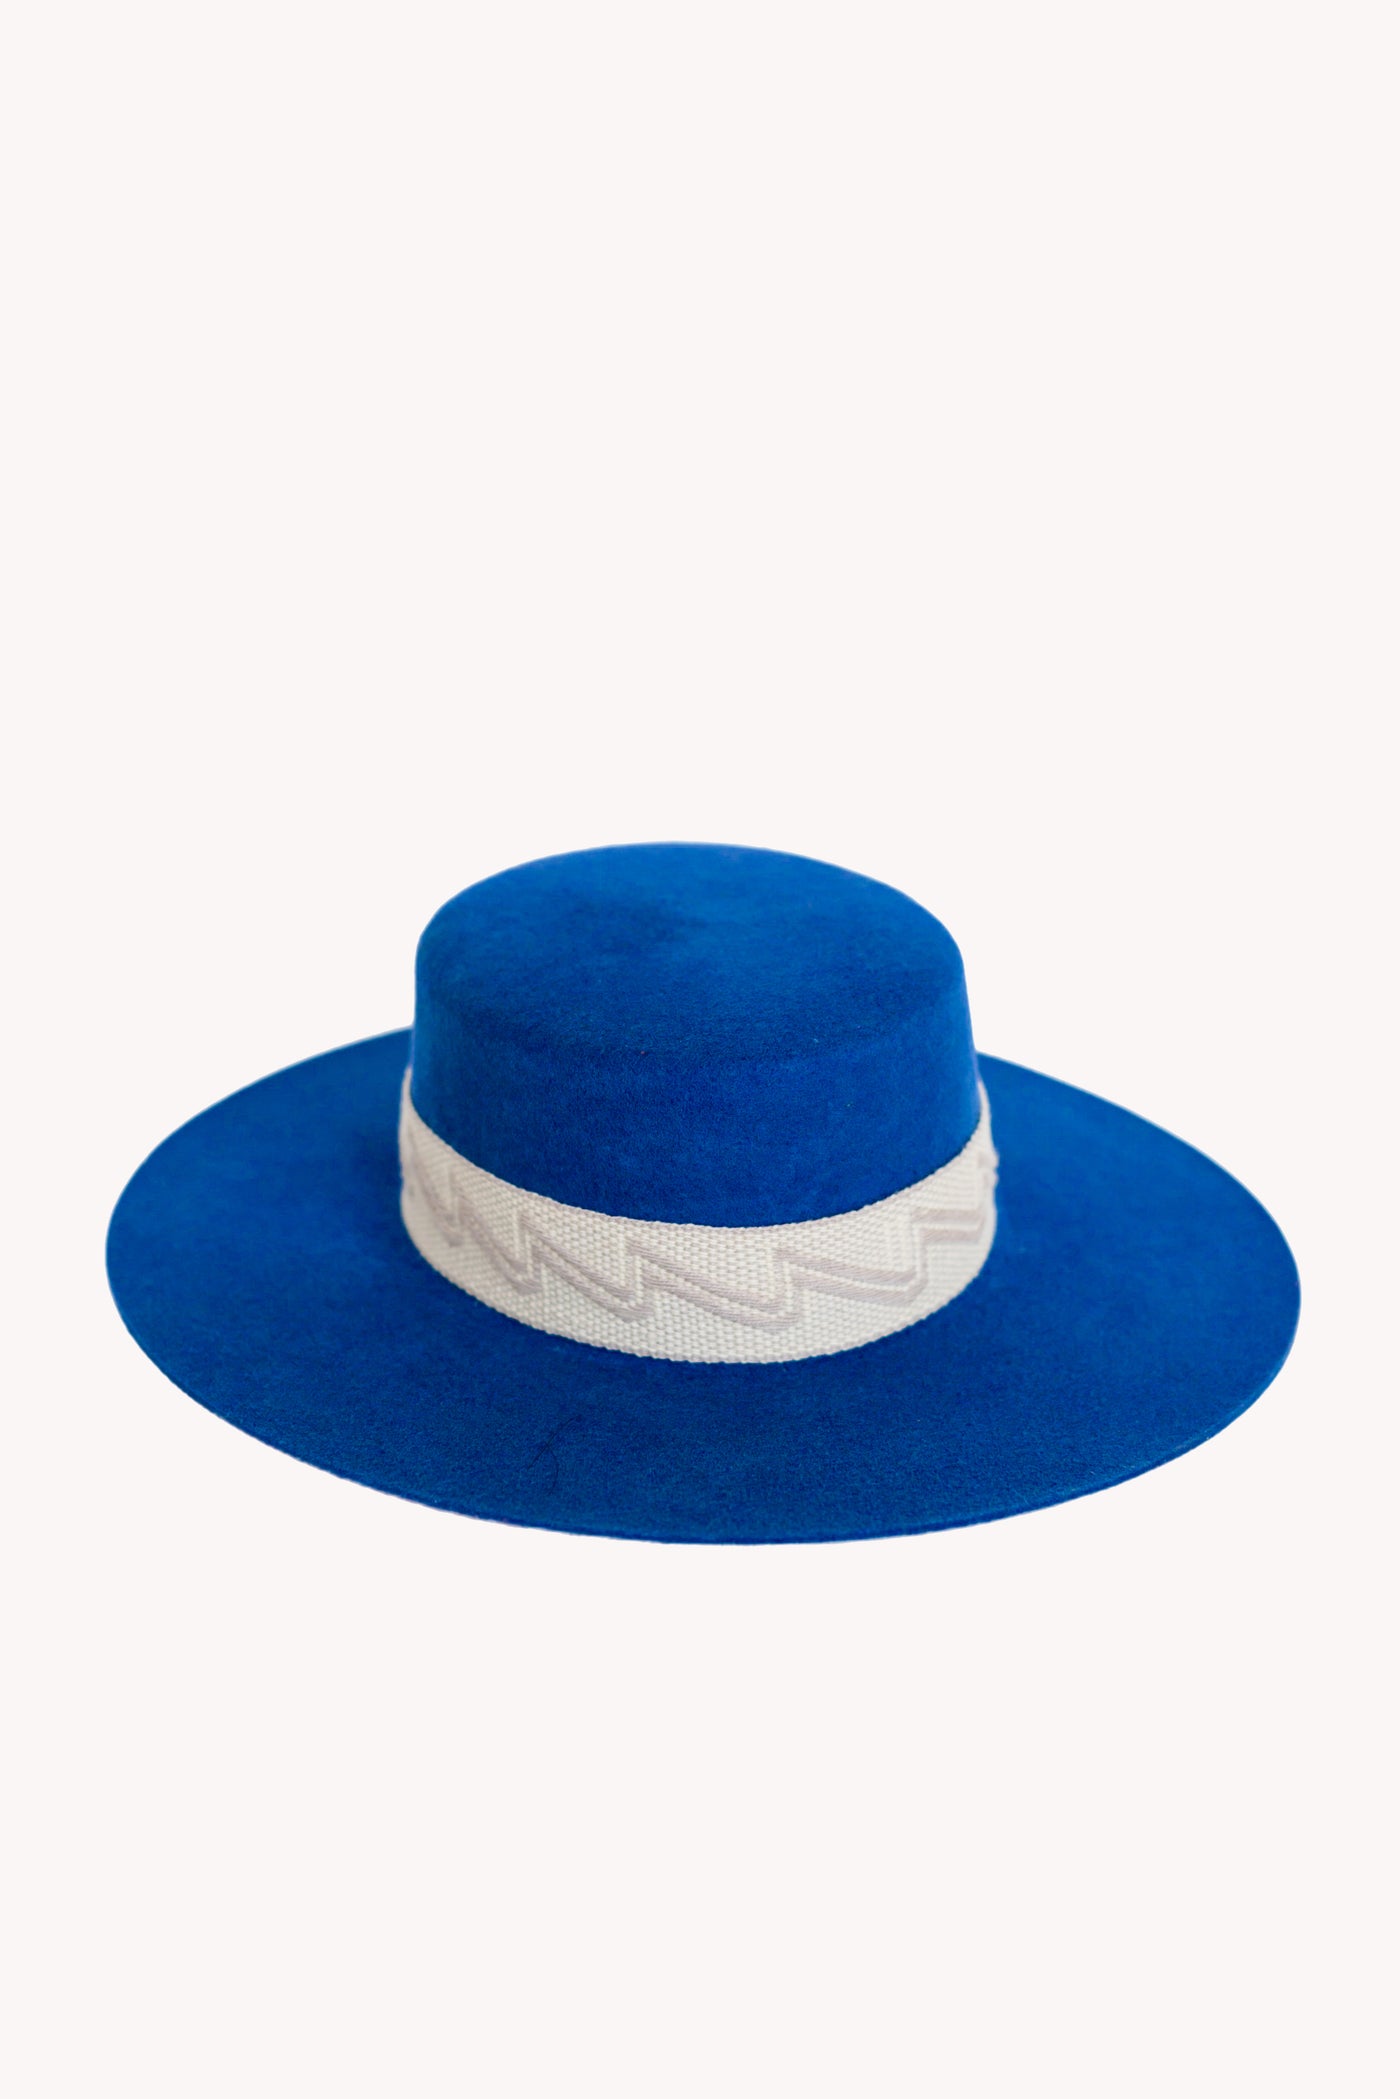 Blue Spanish style alpaca wool hat